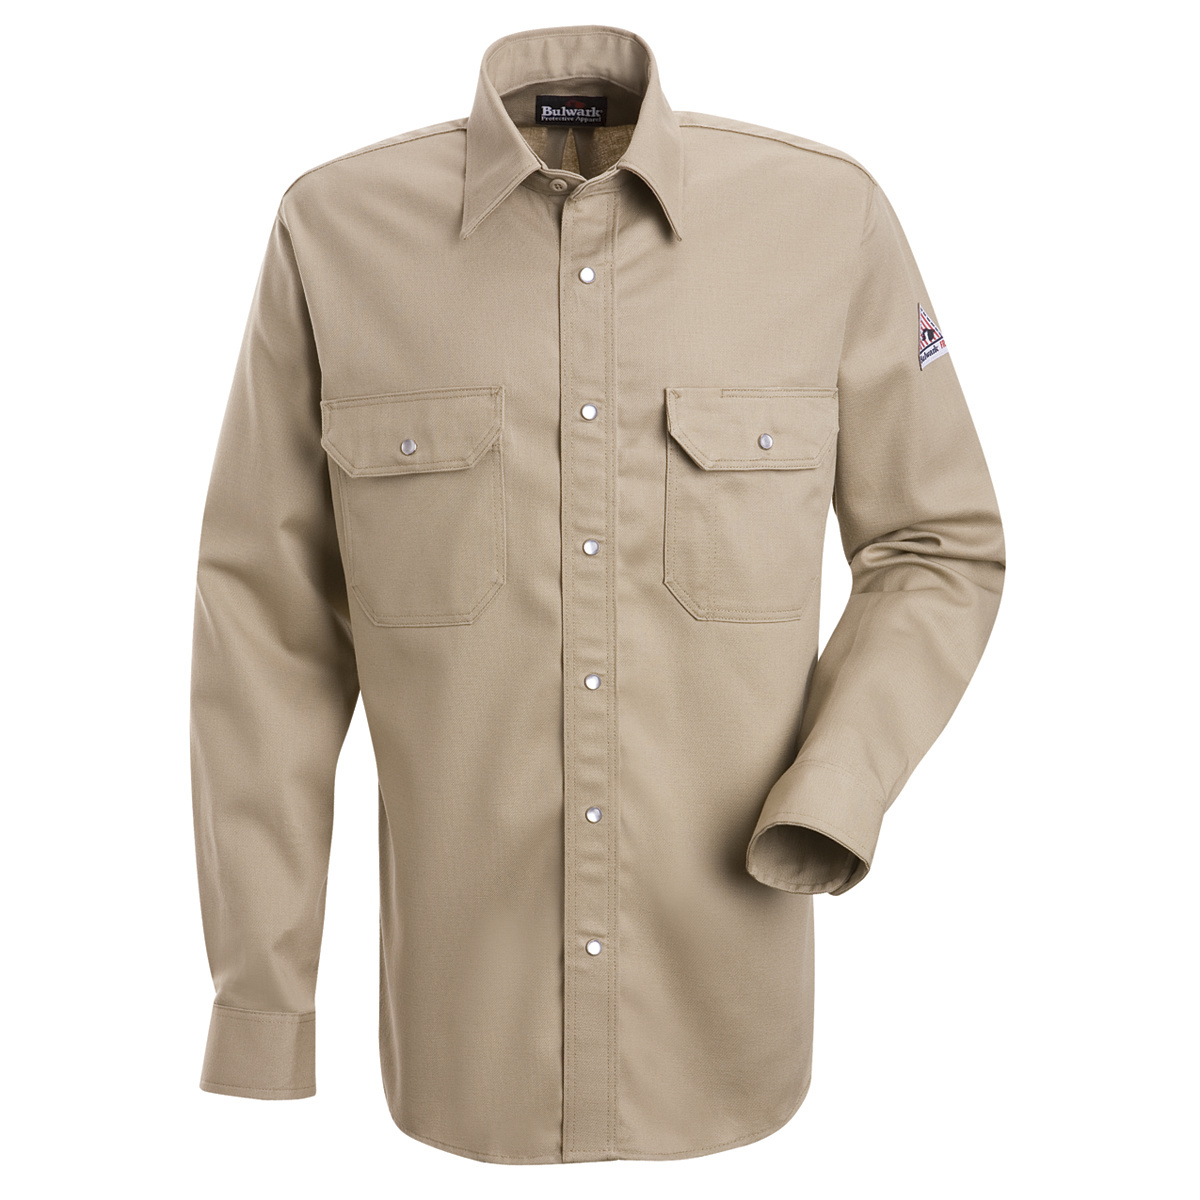 Bulwark® 2X Regular Tan EXCEL FR® Cotton Flame Resistant Uniform Shirt With Snap Front Closure